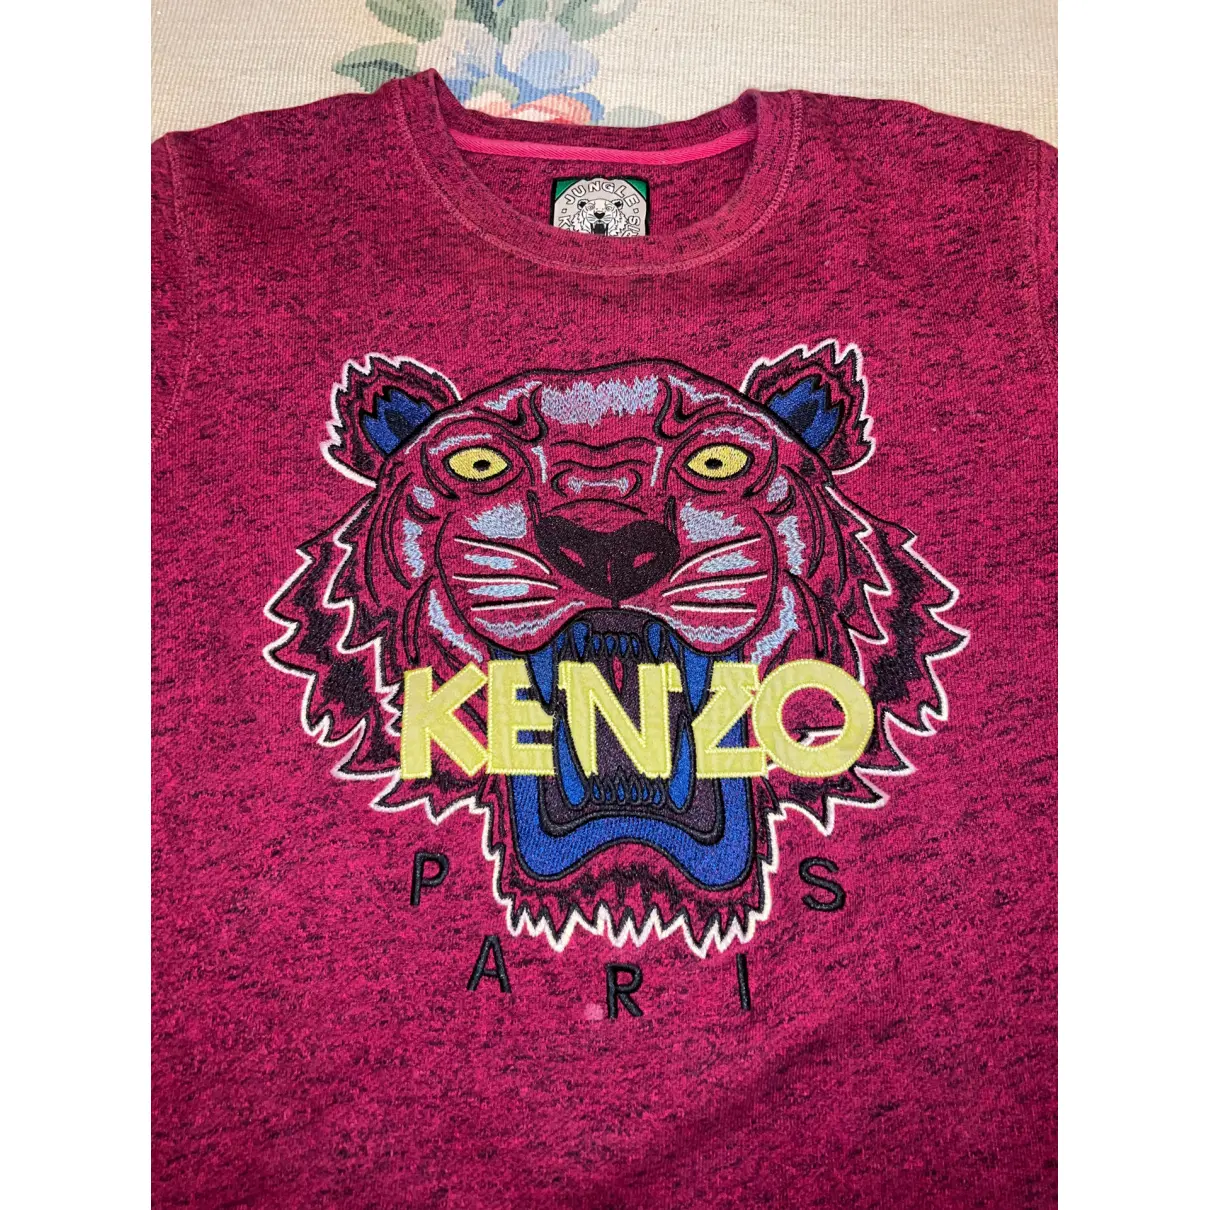 Buy Kenzo Tiger sweatshirt online